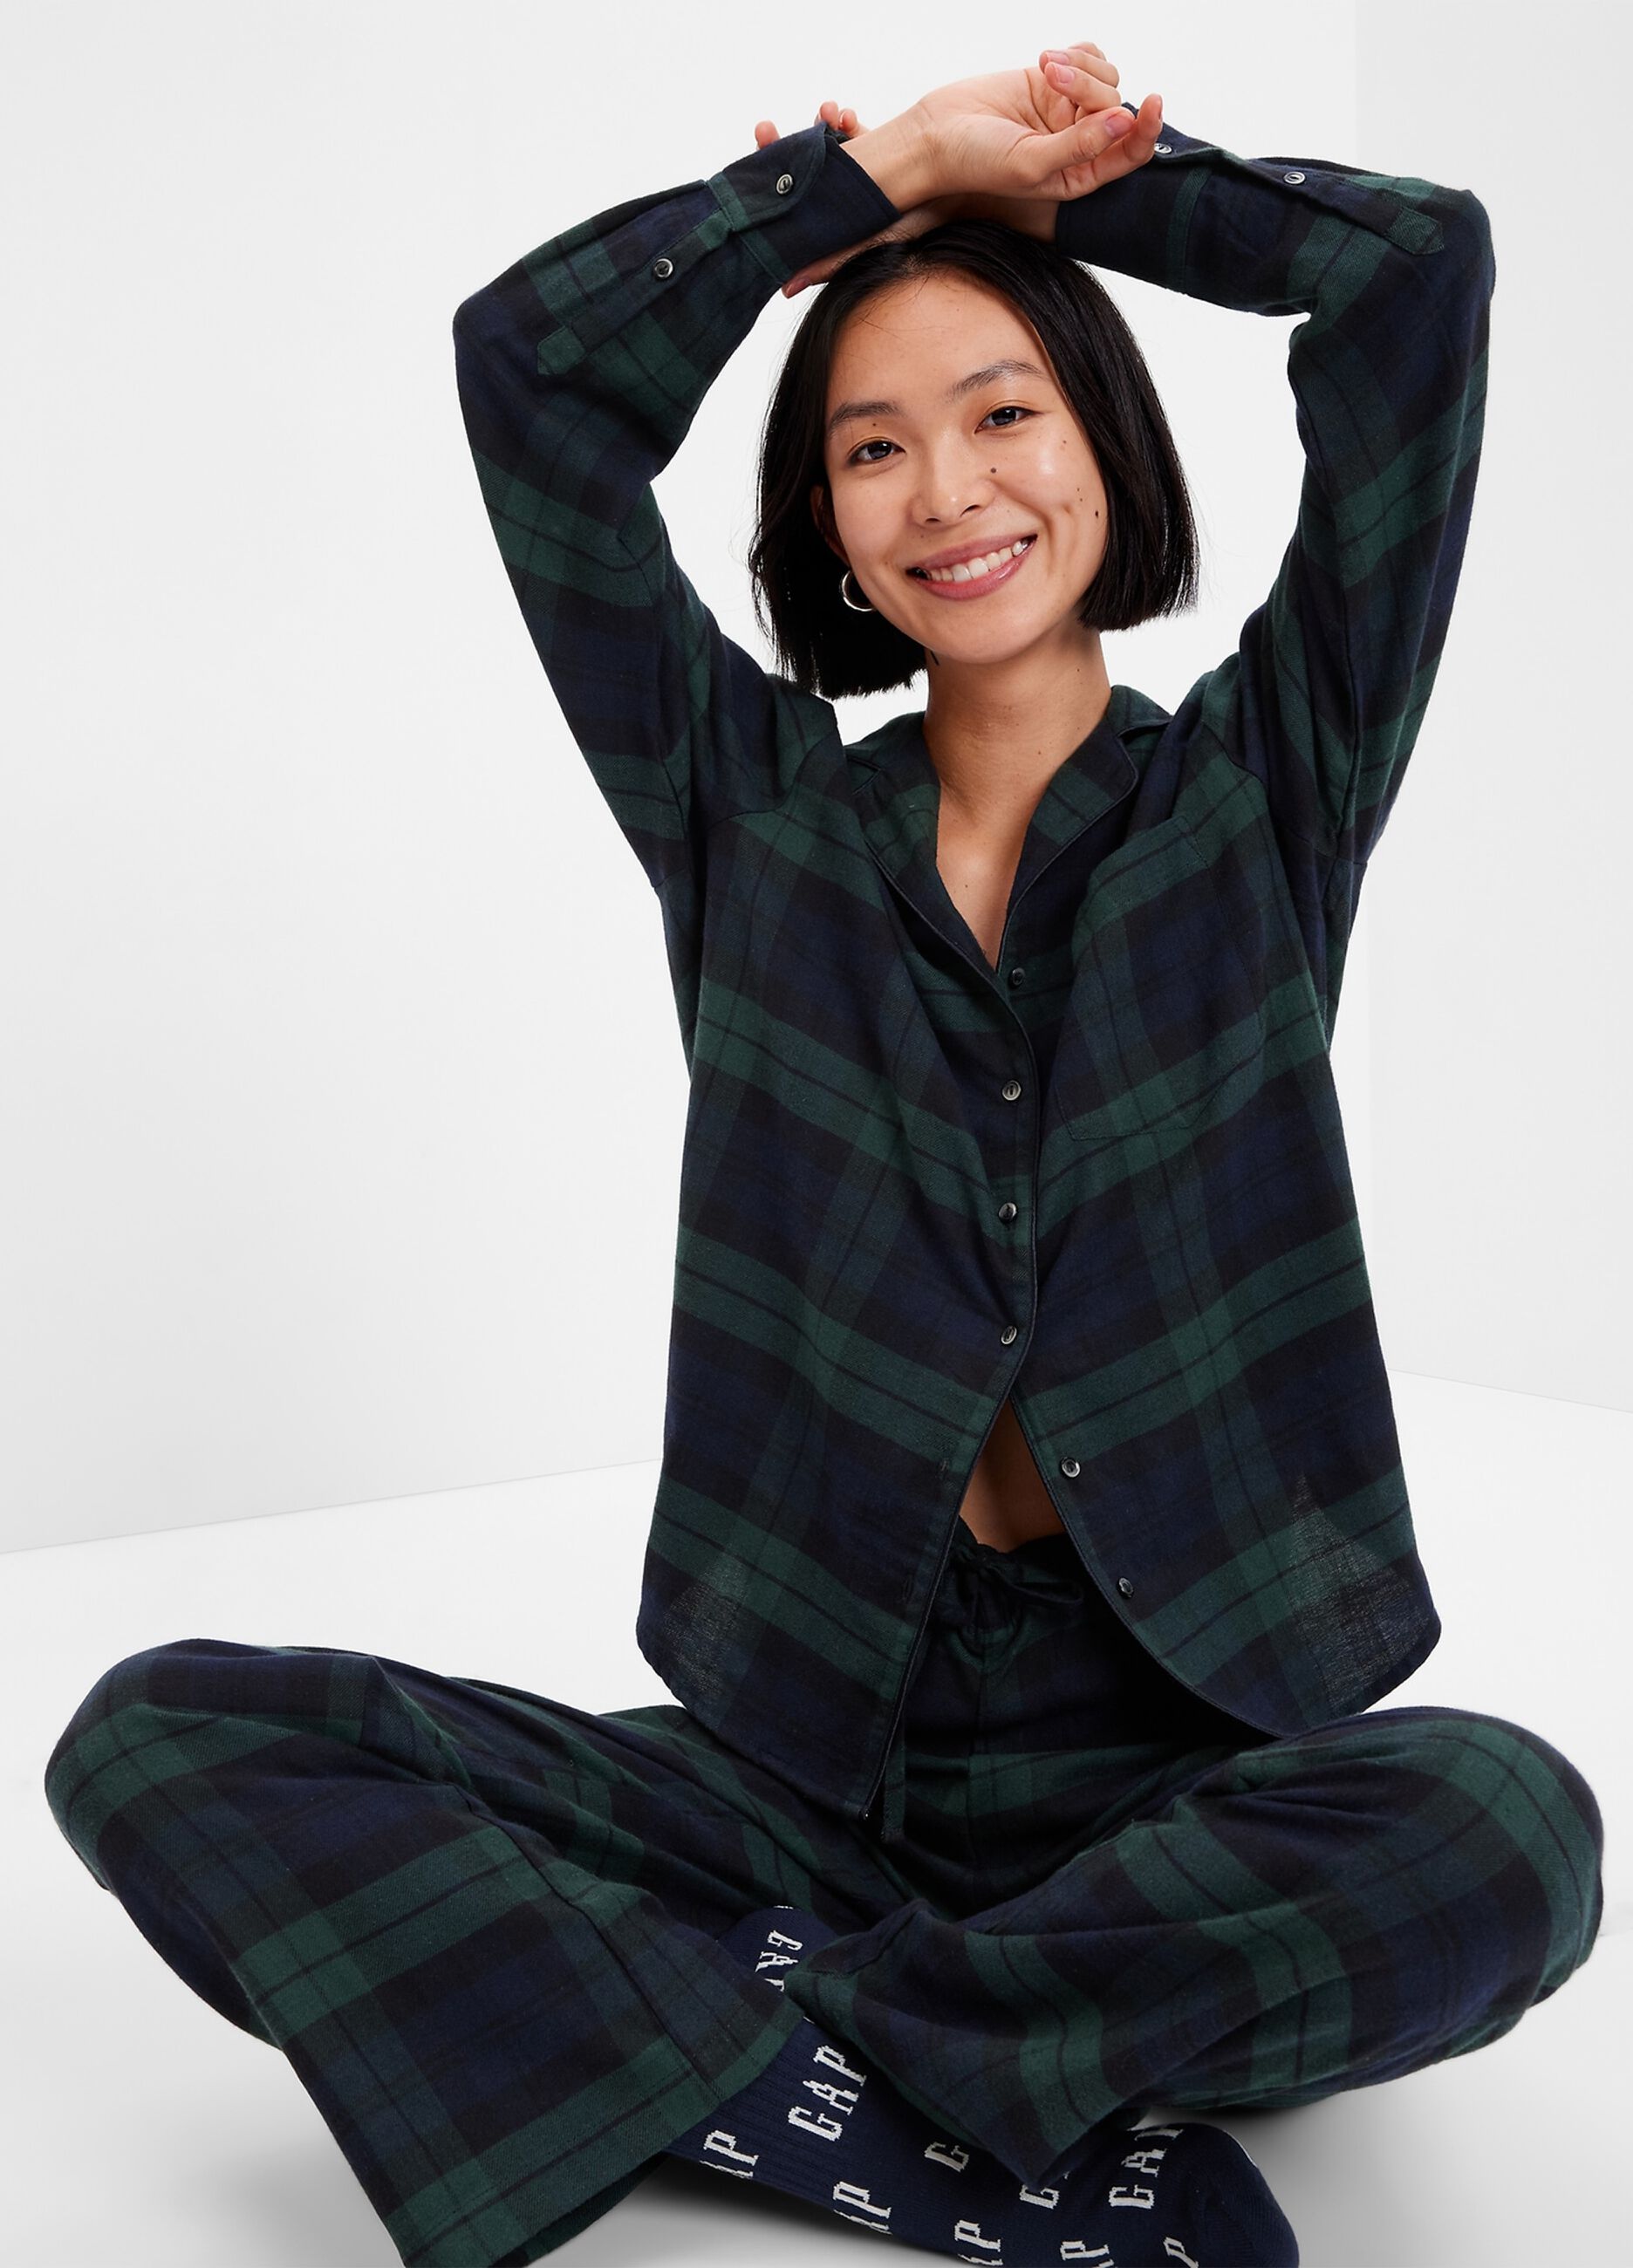 Full-length flannel pyjamas with tartan pattern_0